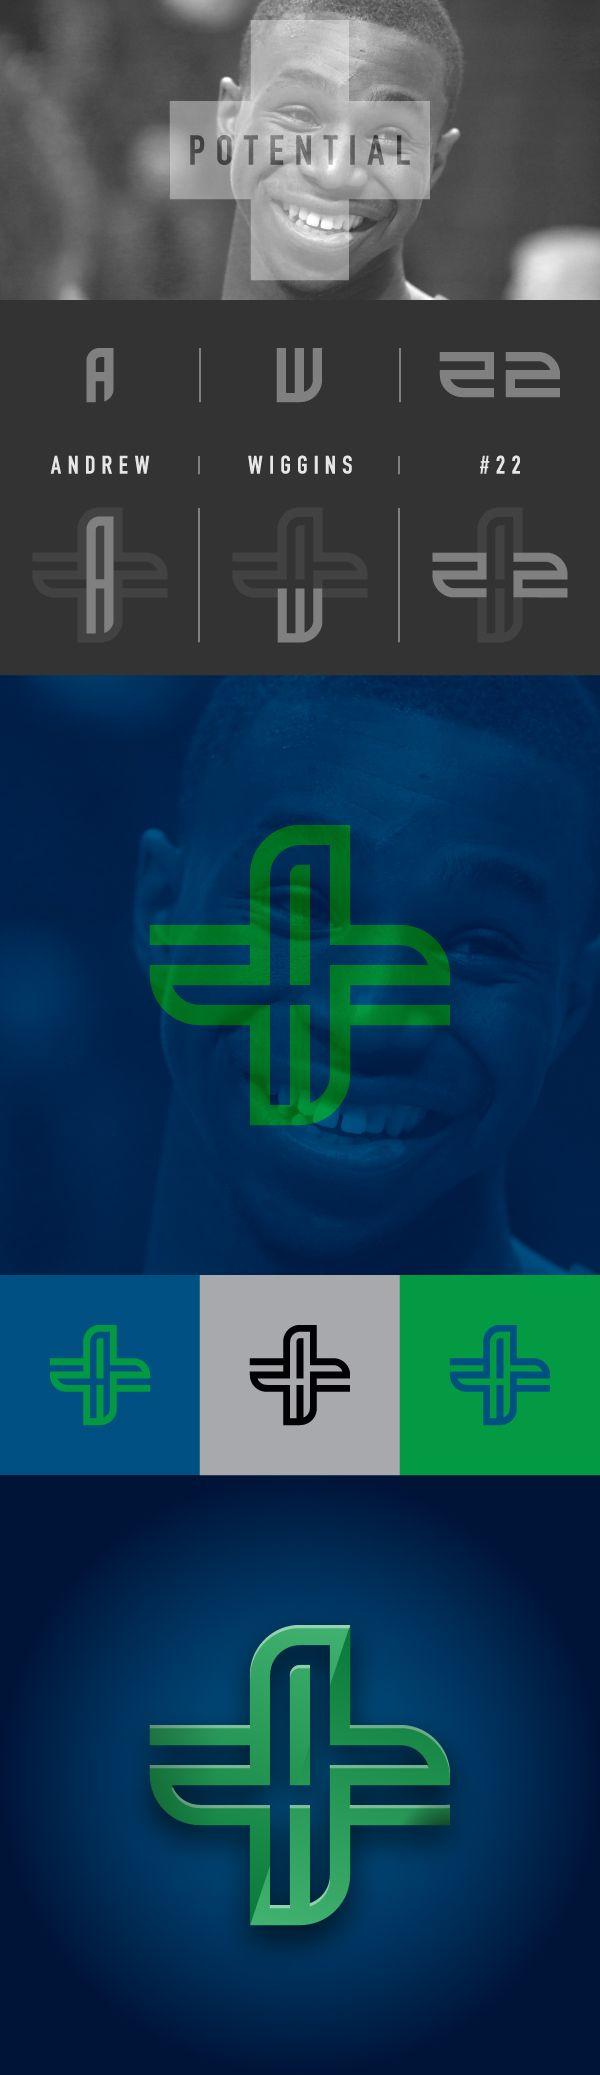 Andrew Wiggins Logo - Andrew Wiggins - NBA Player logo concept on Behance